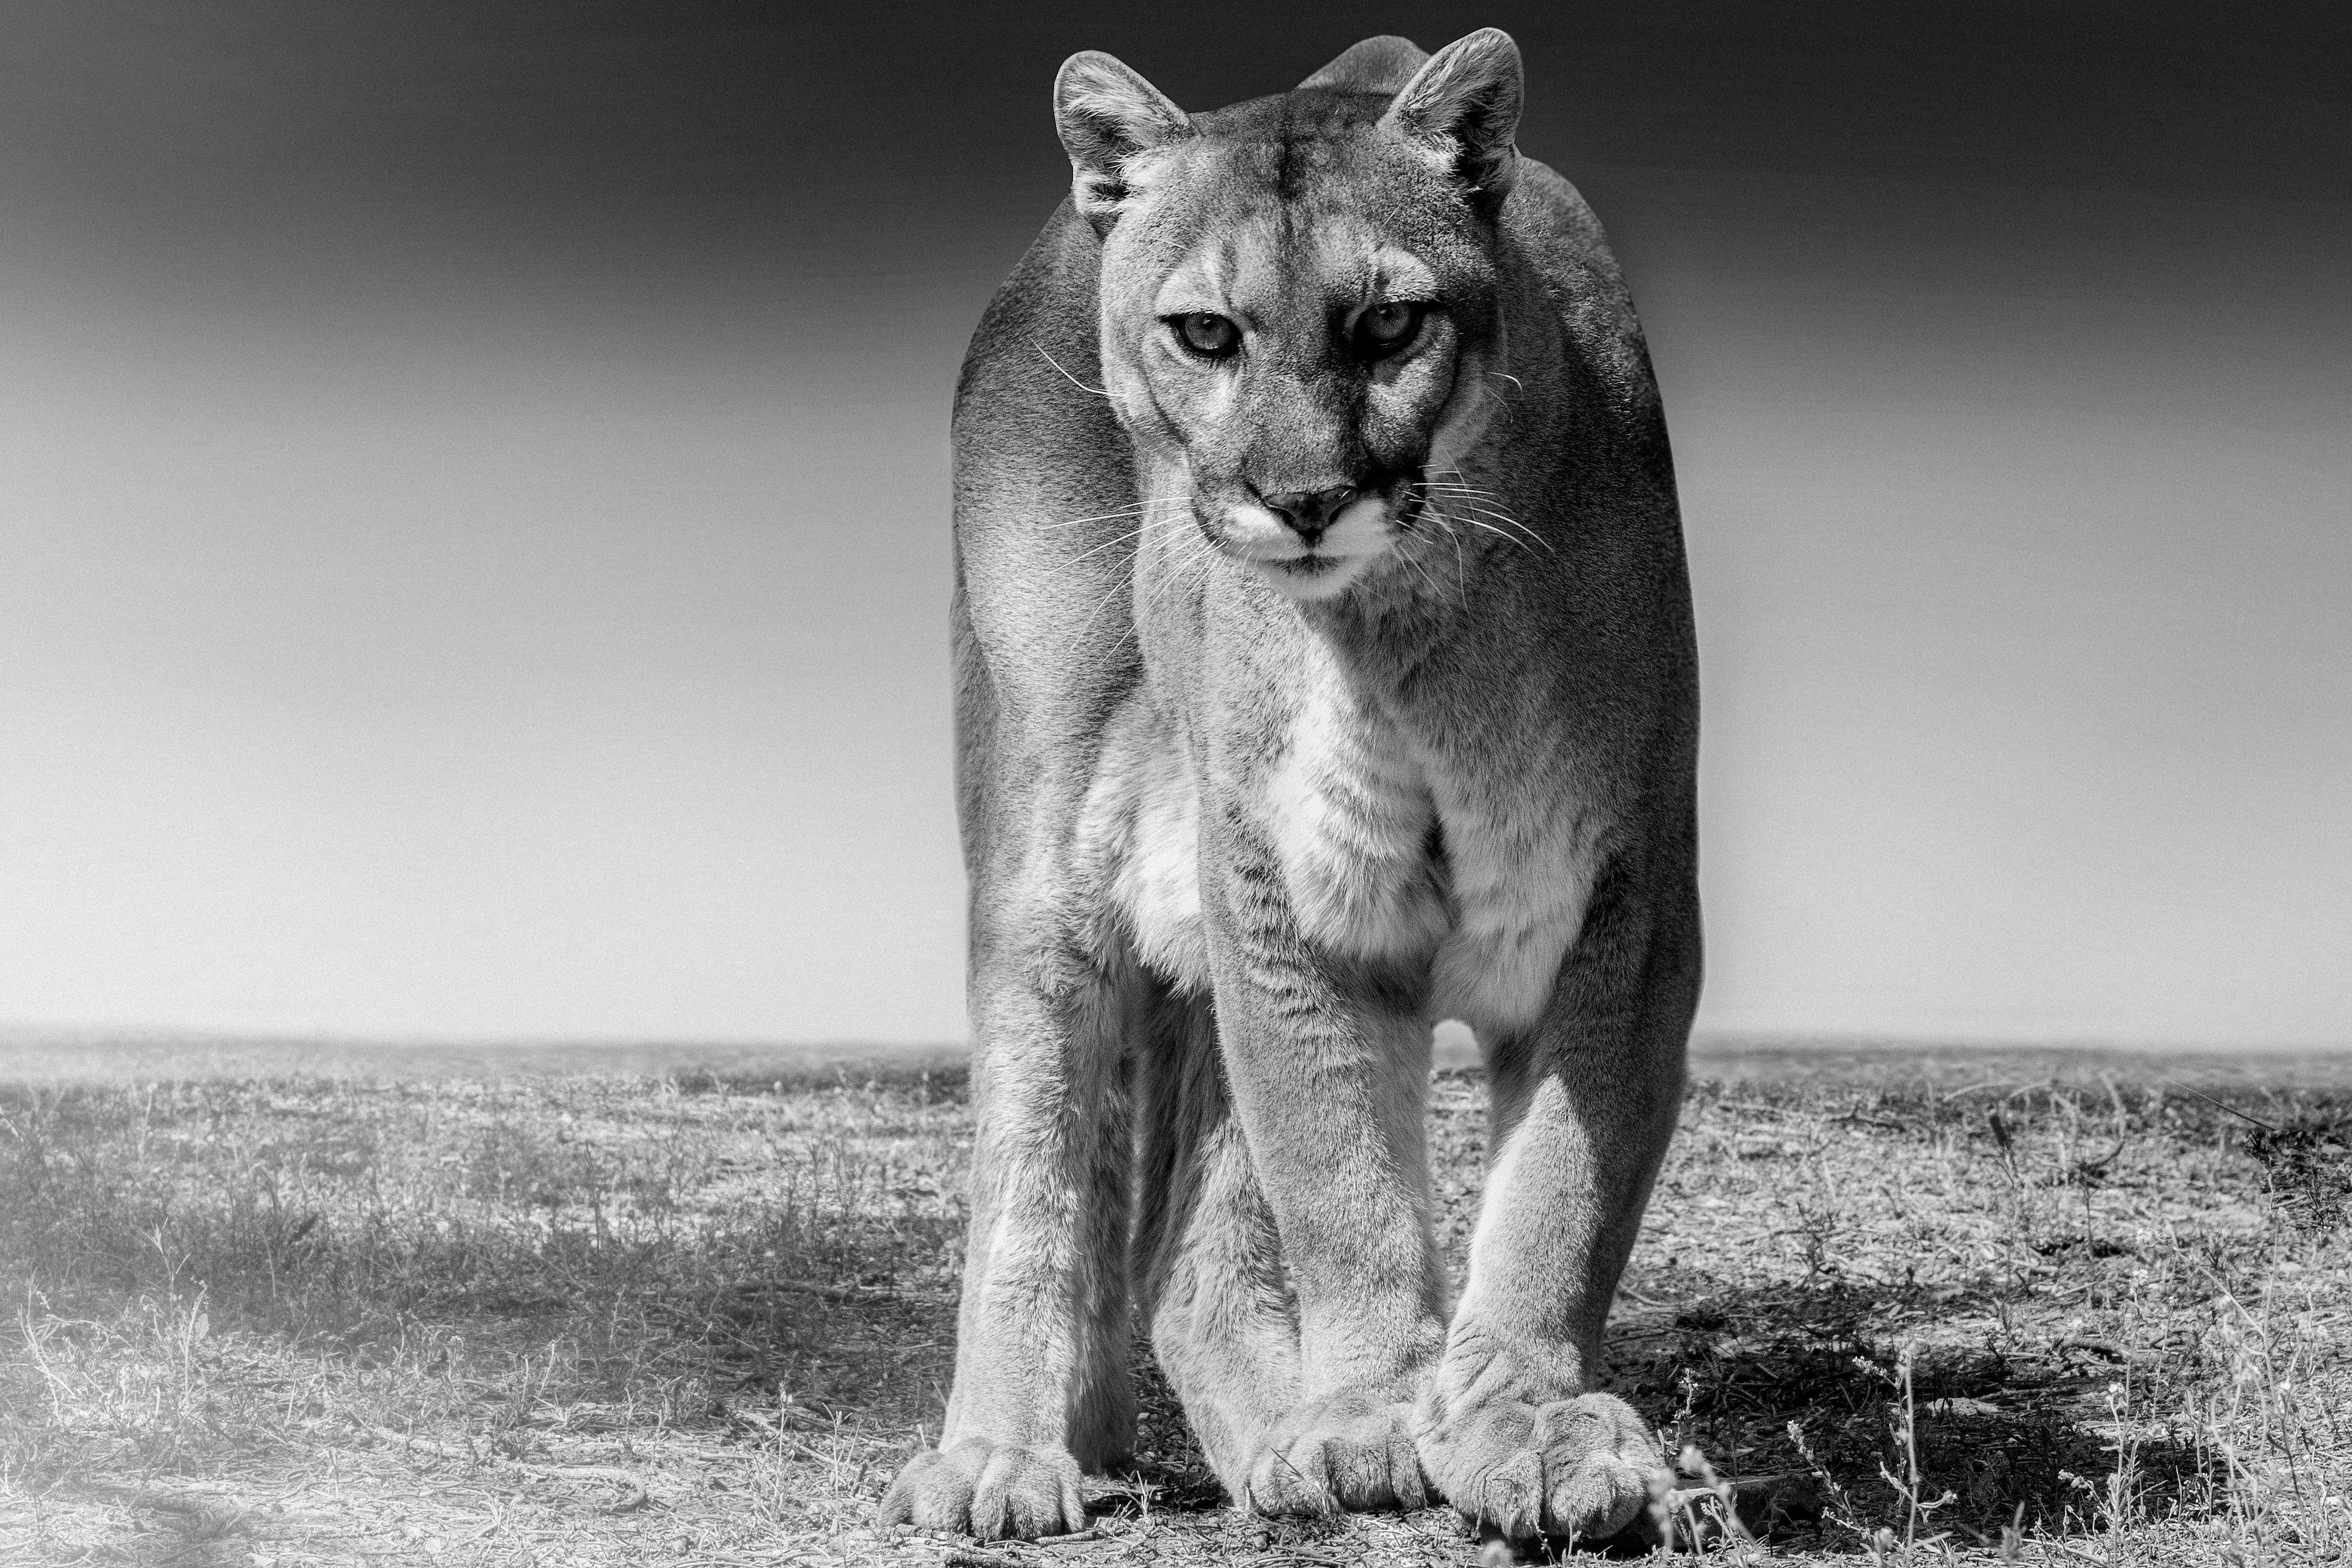 Shane Russeck Animal Print - Cougar Print 80x110 - Fine Art Photography of Mountain Lion